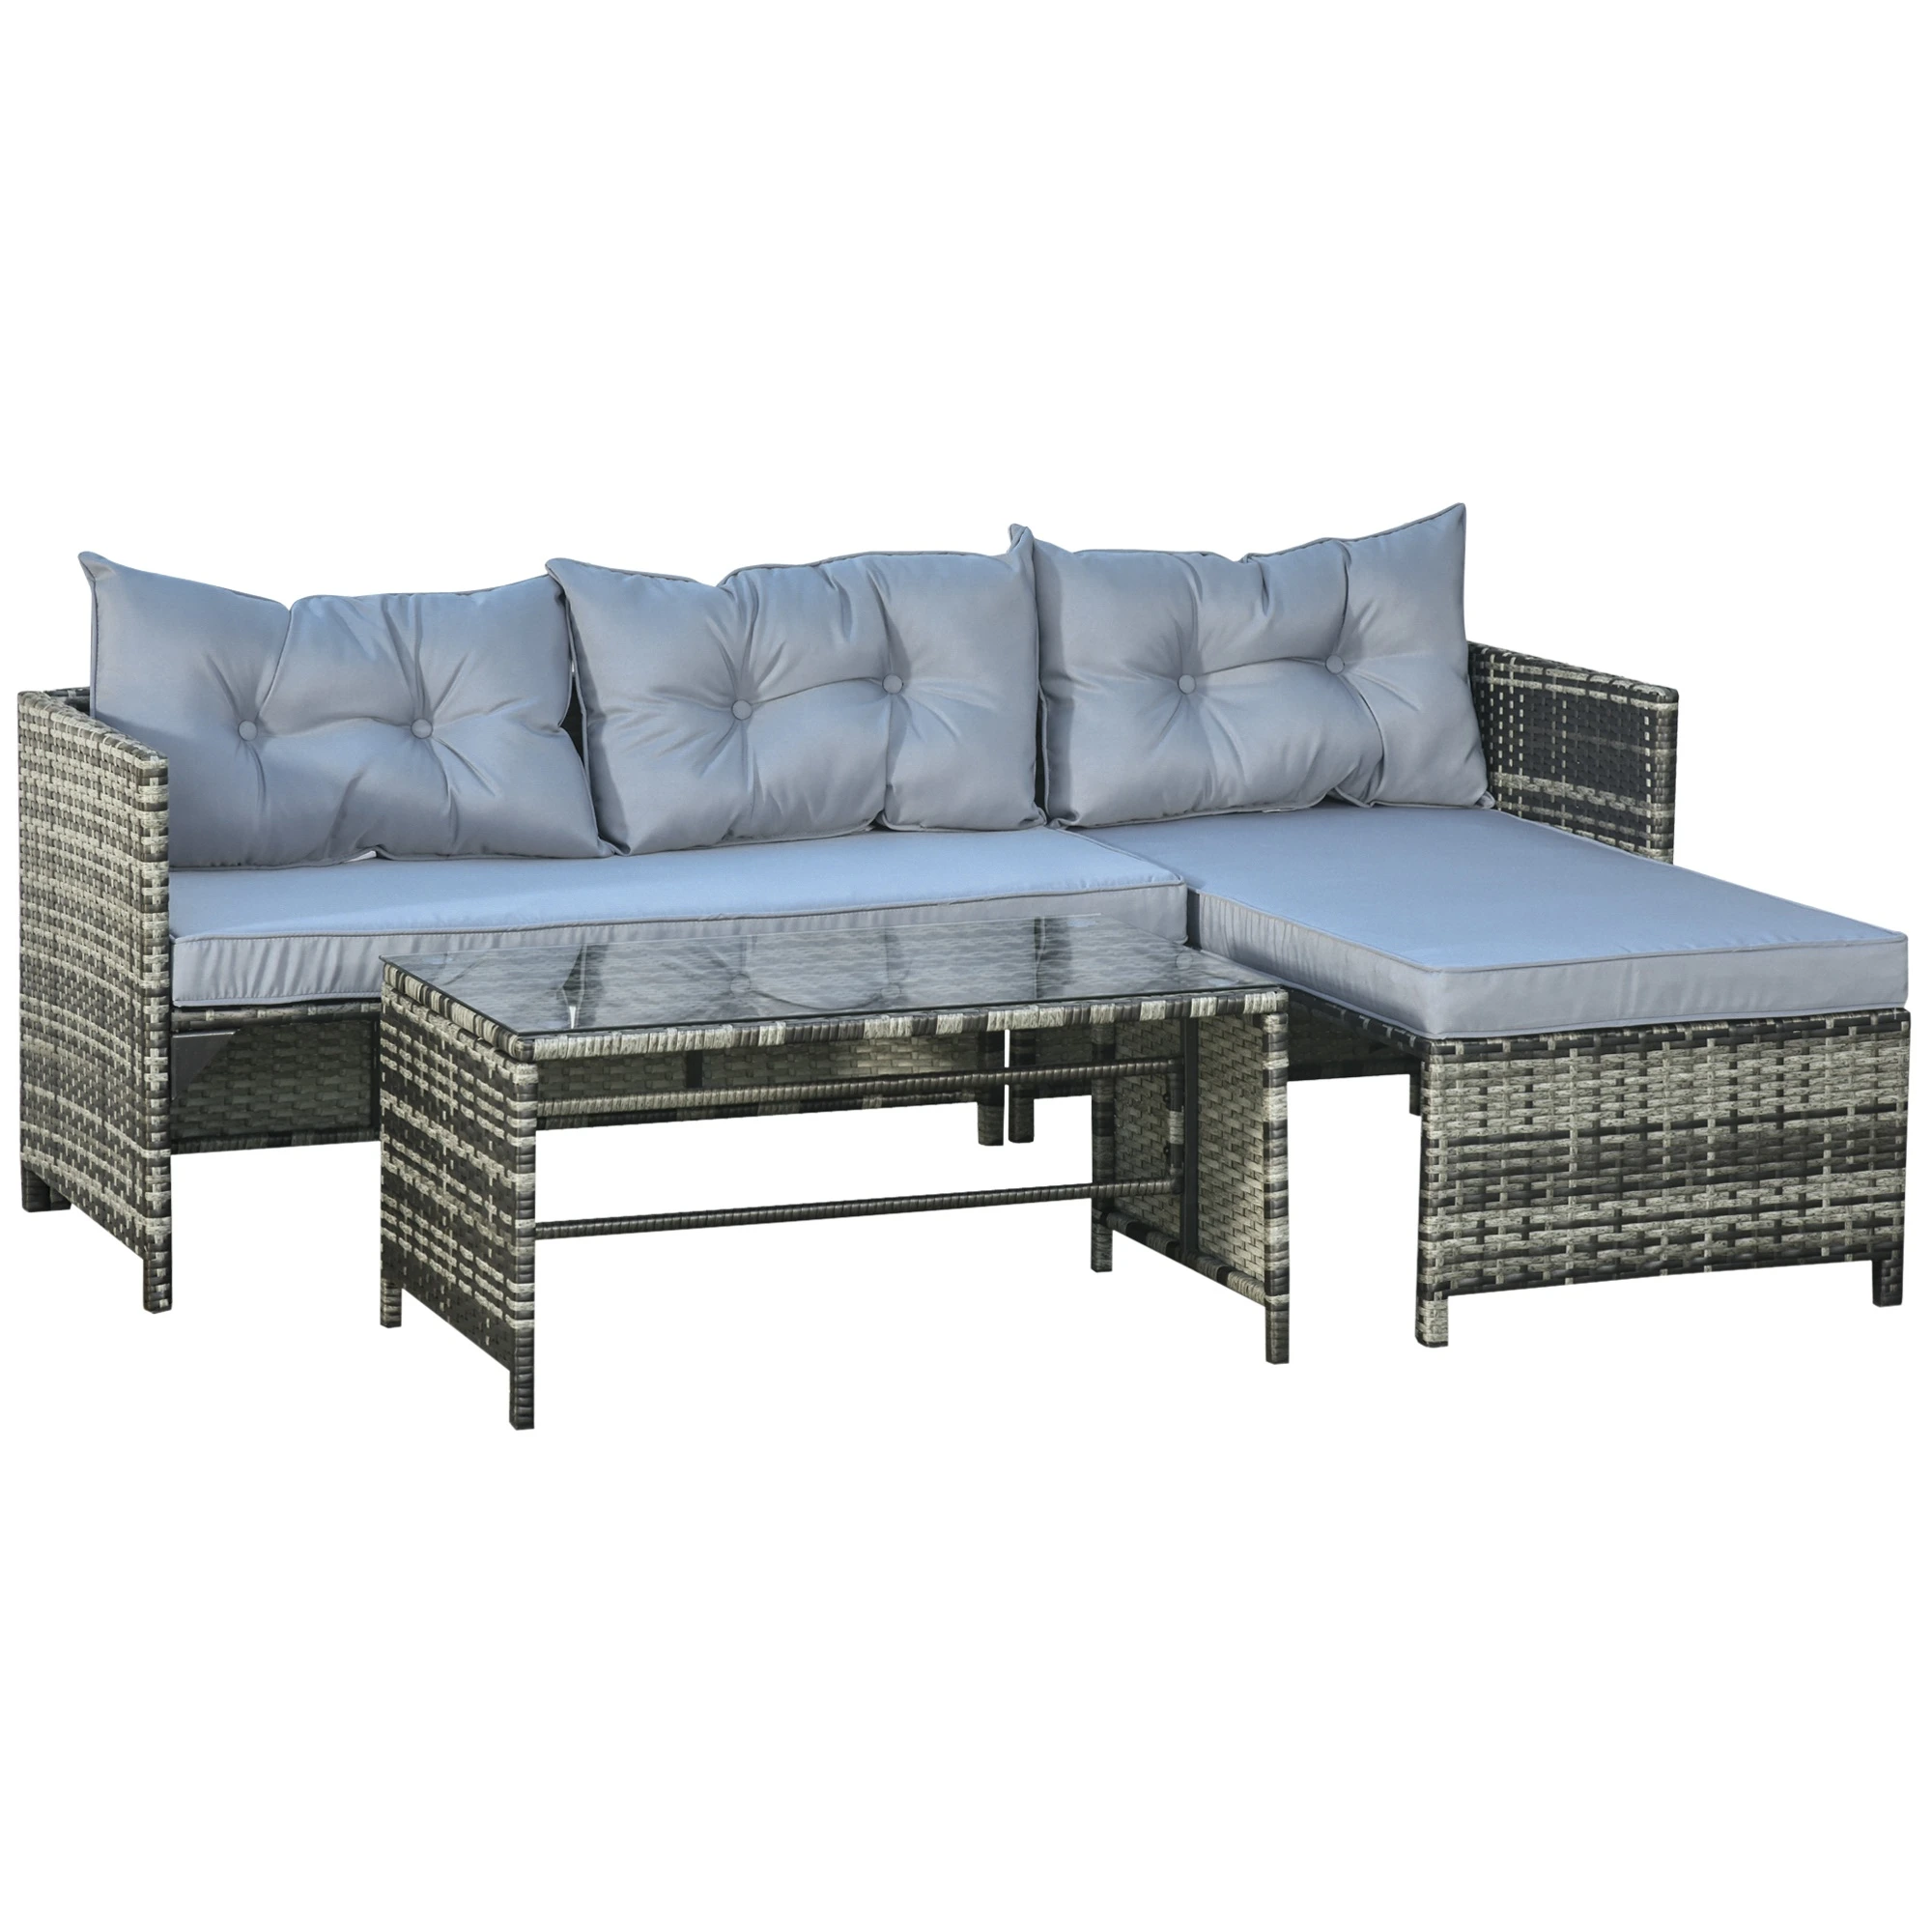 3-Piece Wicker Rattan Patio Set, Incl. Sofa, Chair, & Coffee Table, Grey